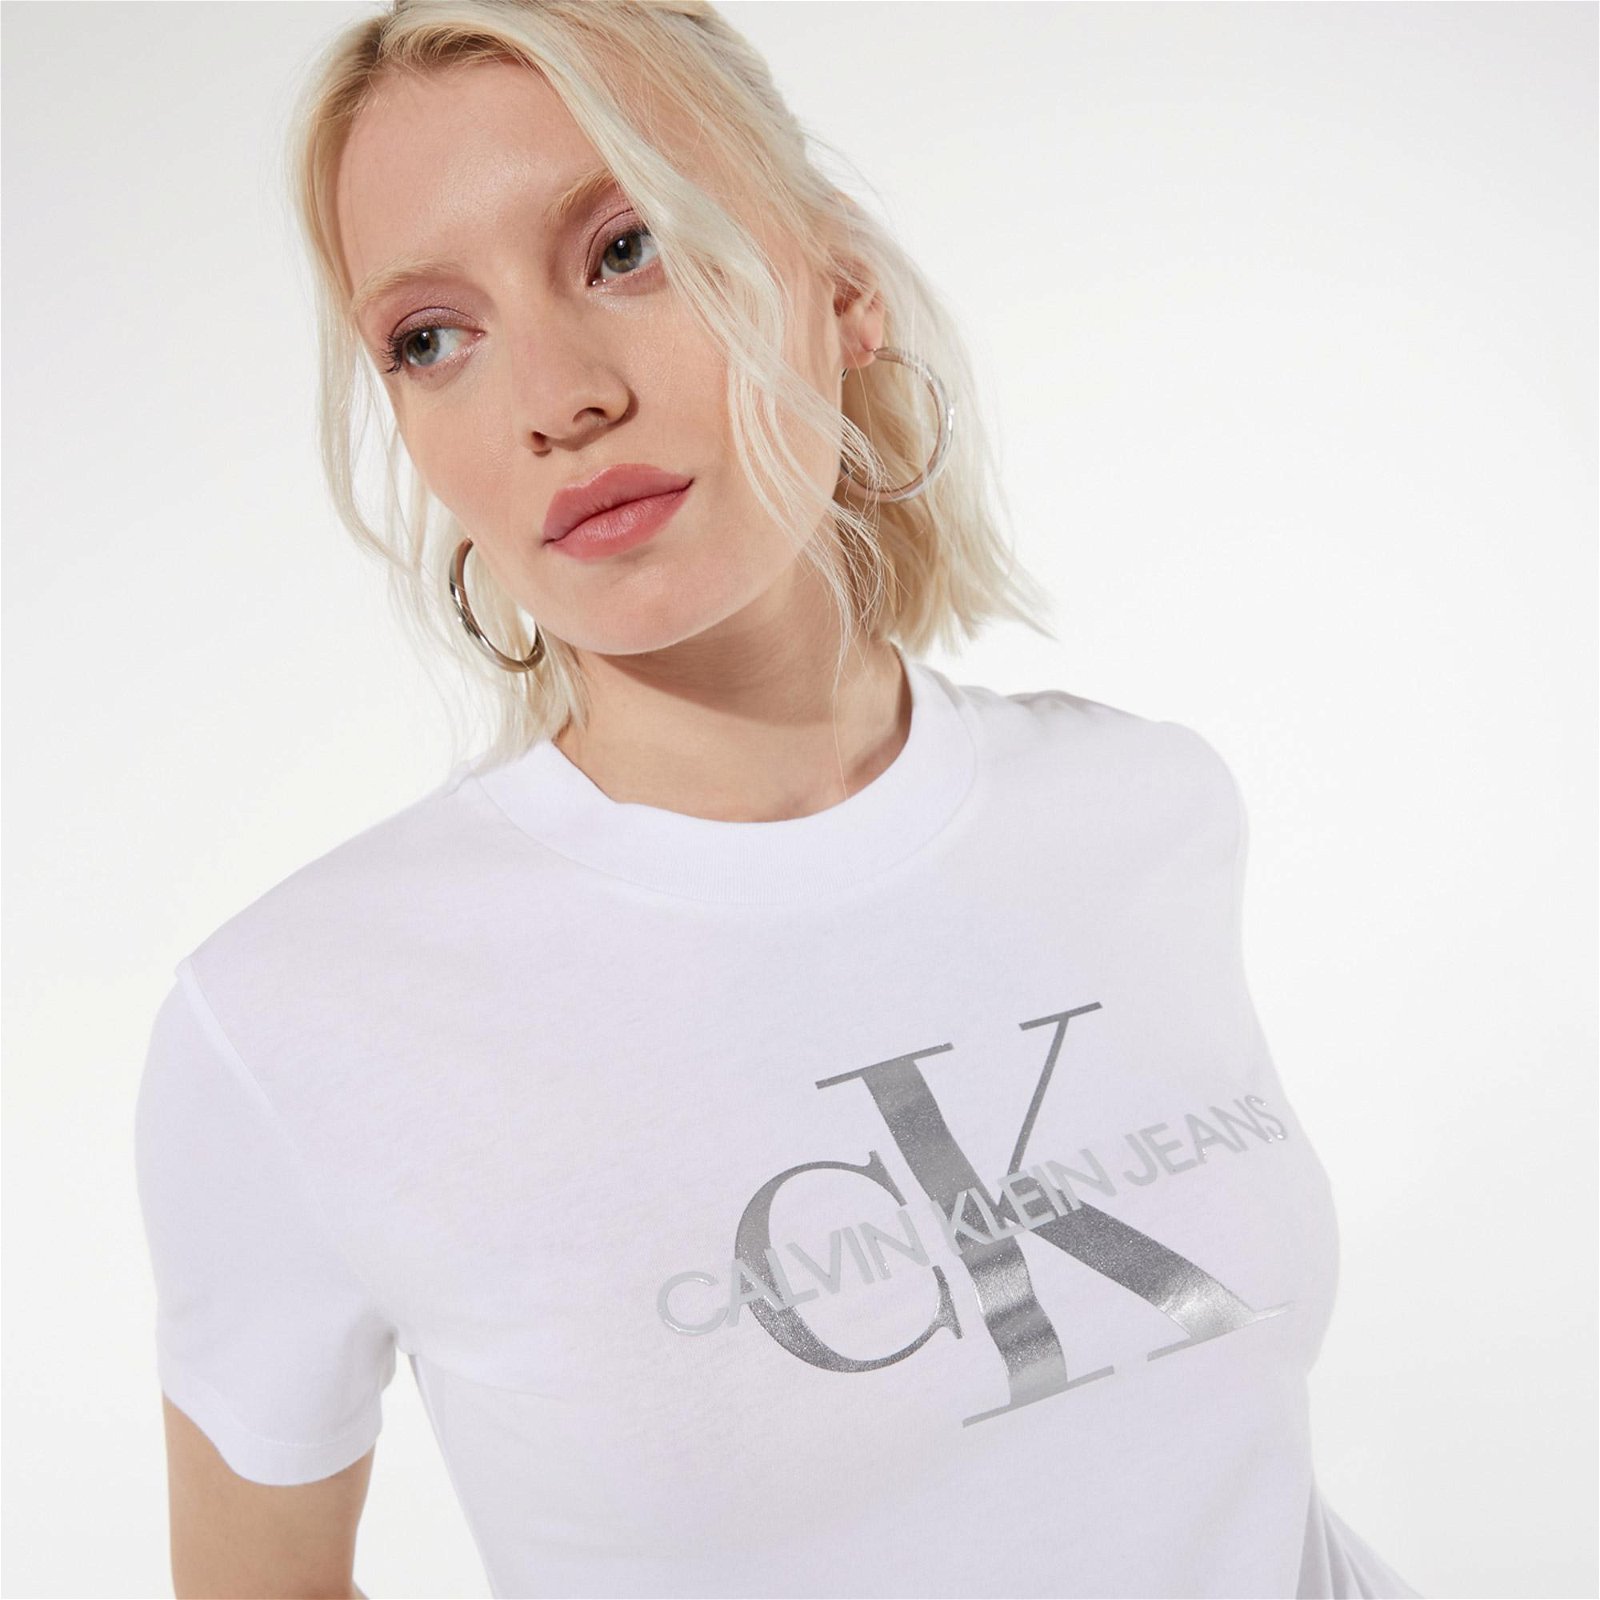 Calvin Klein Matt & Shine Kadın Beyaz T-Shirt